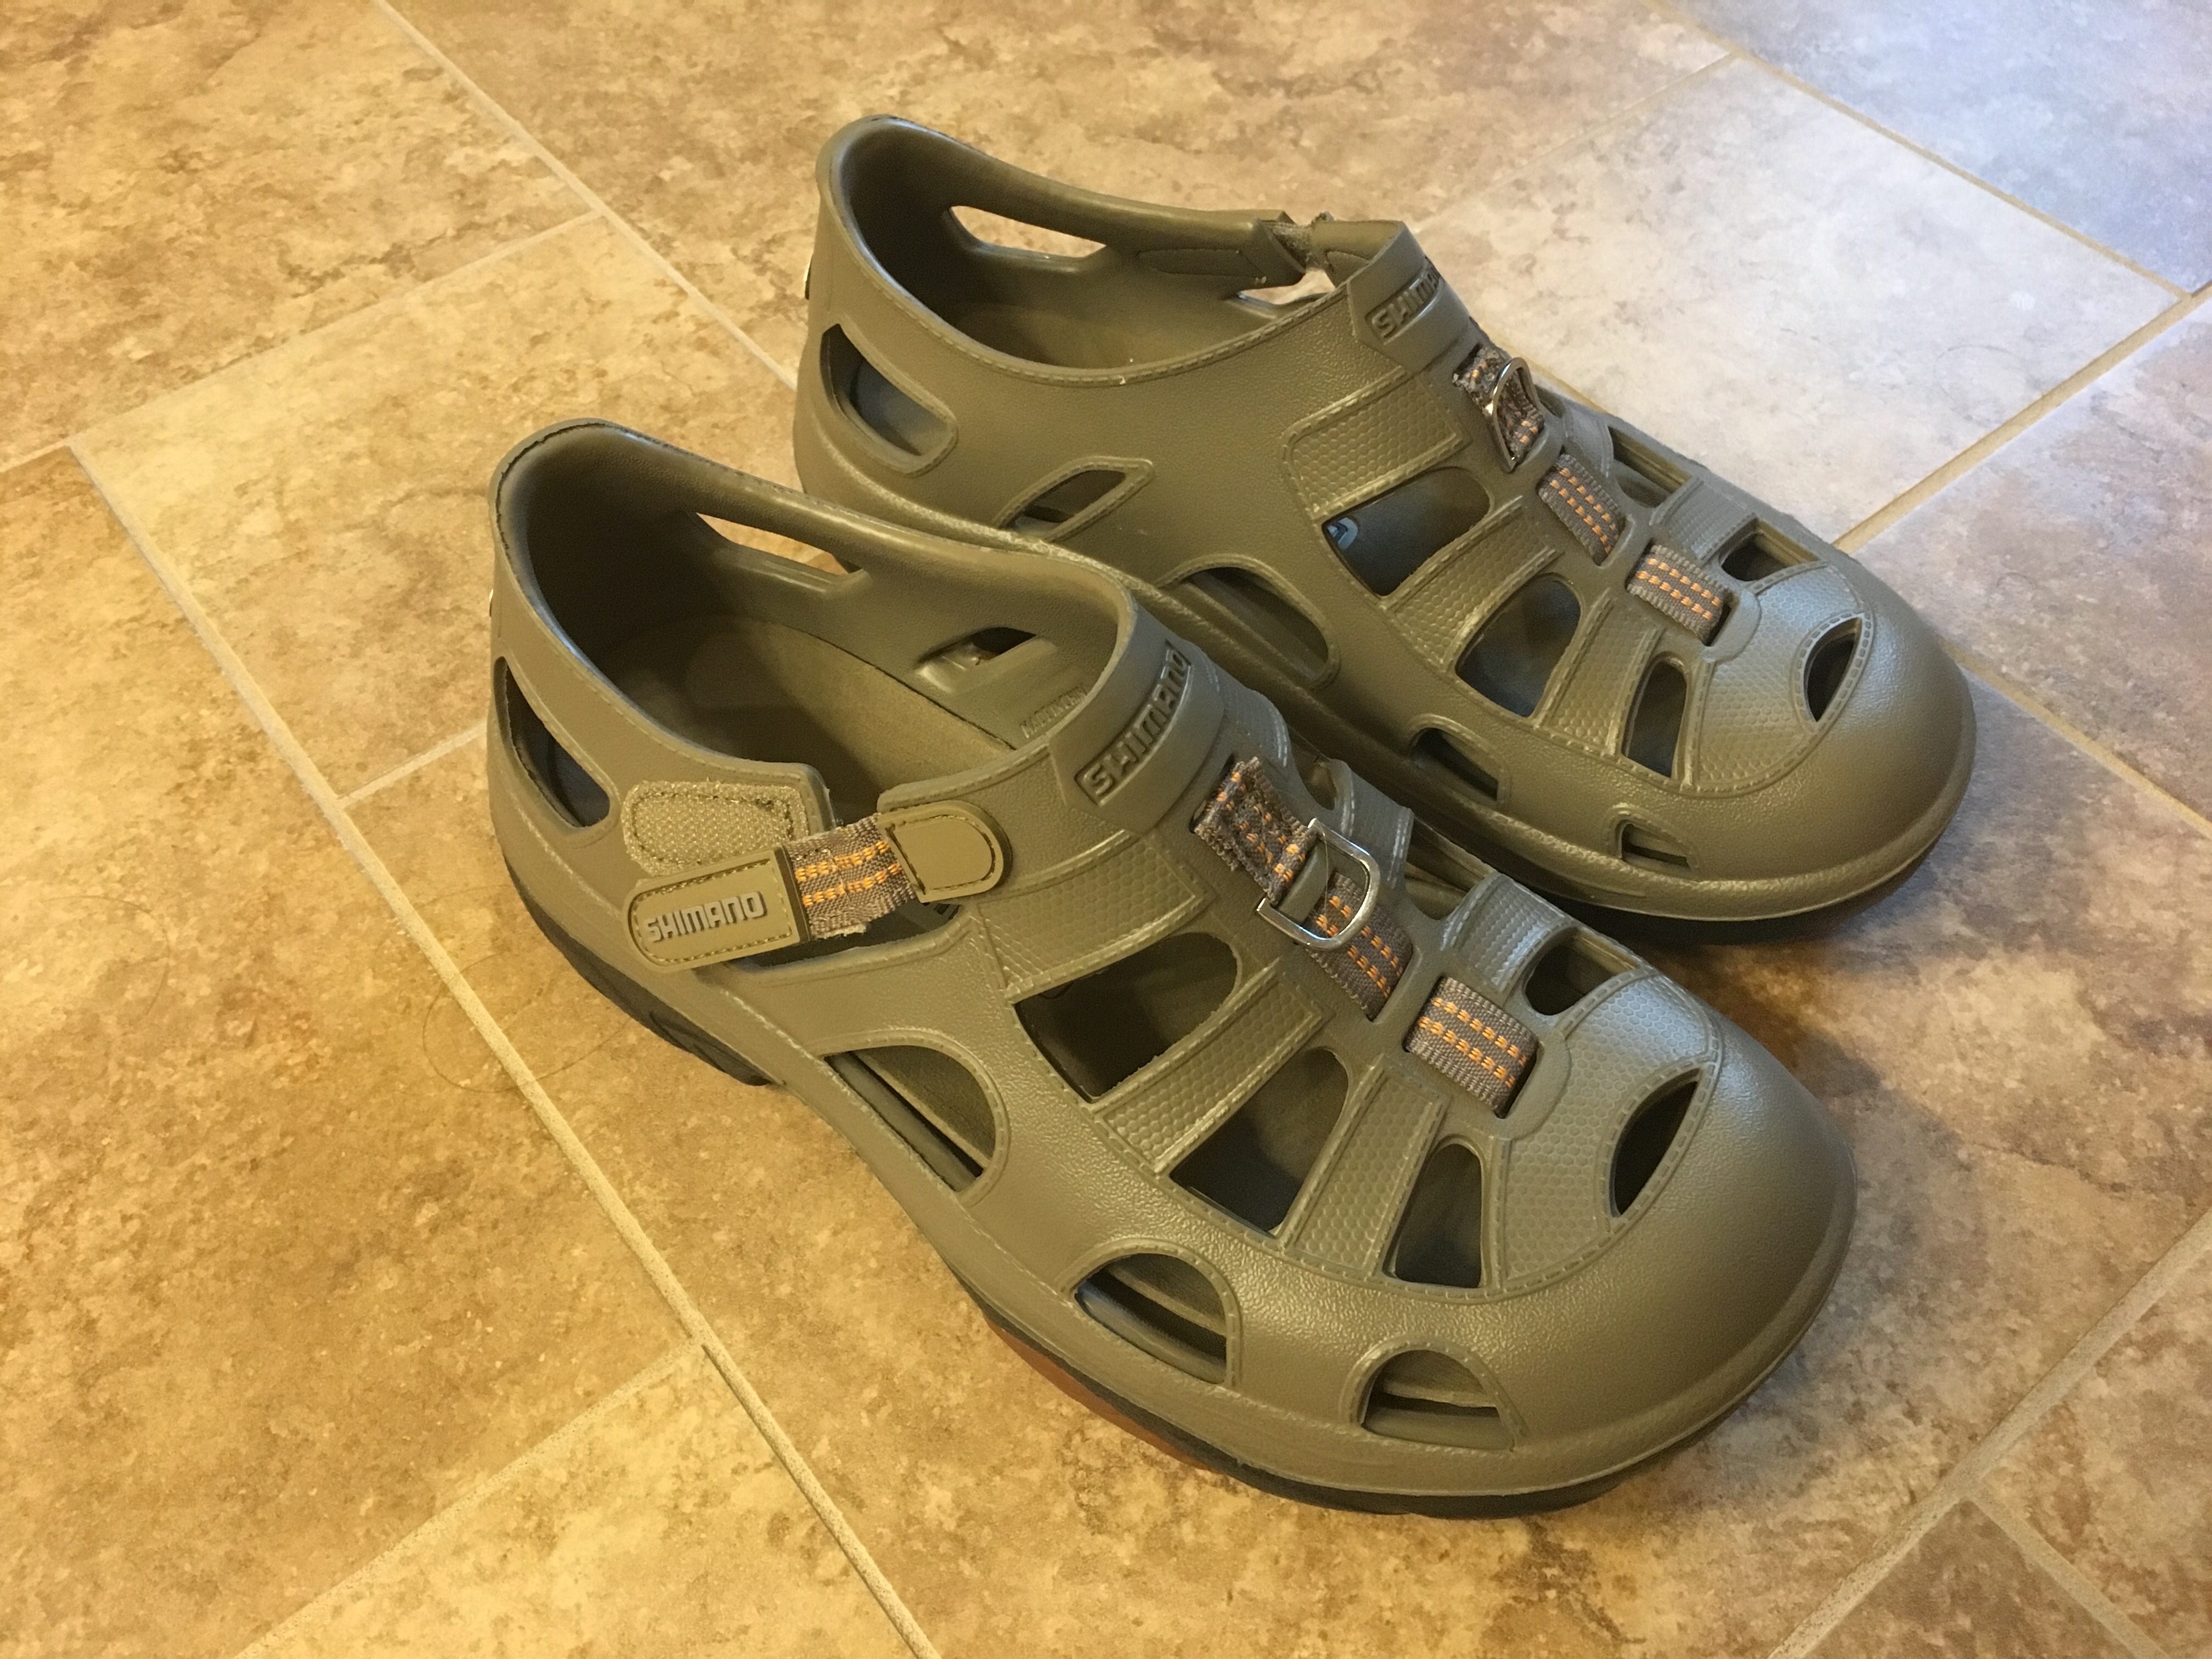 Shimano Evair Marine/Fishing Shoes (Never worn) – Size 10